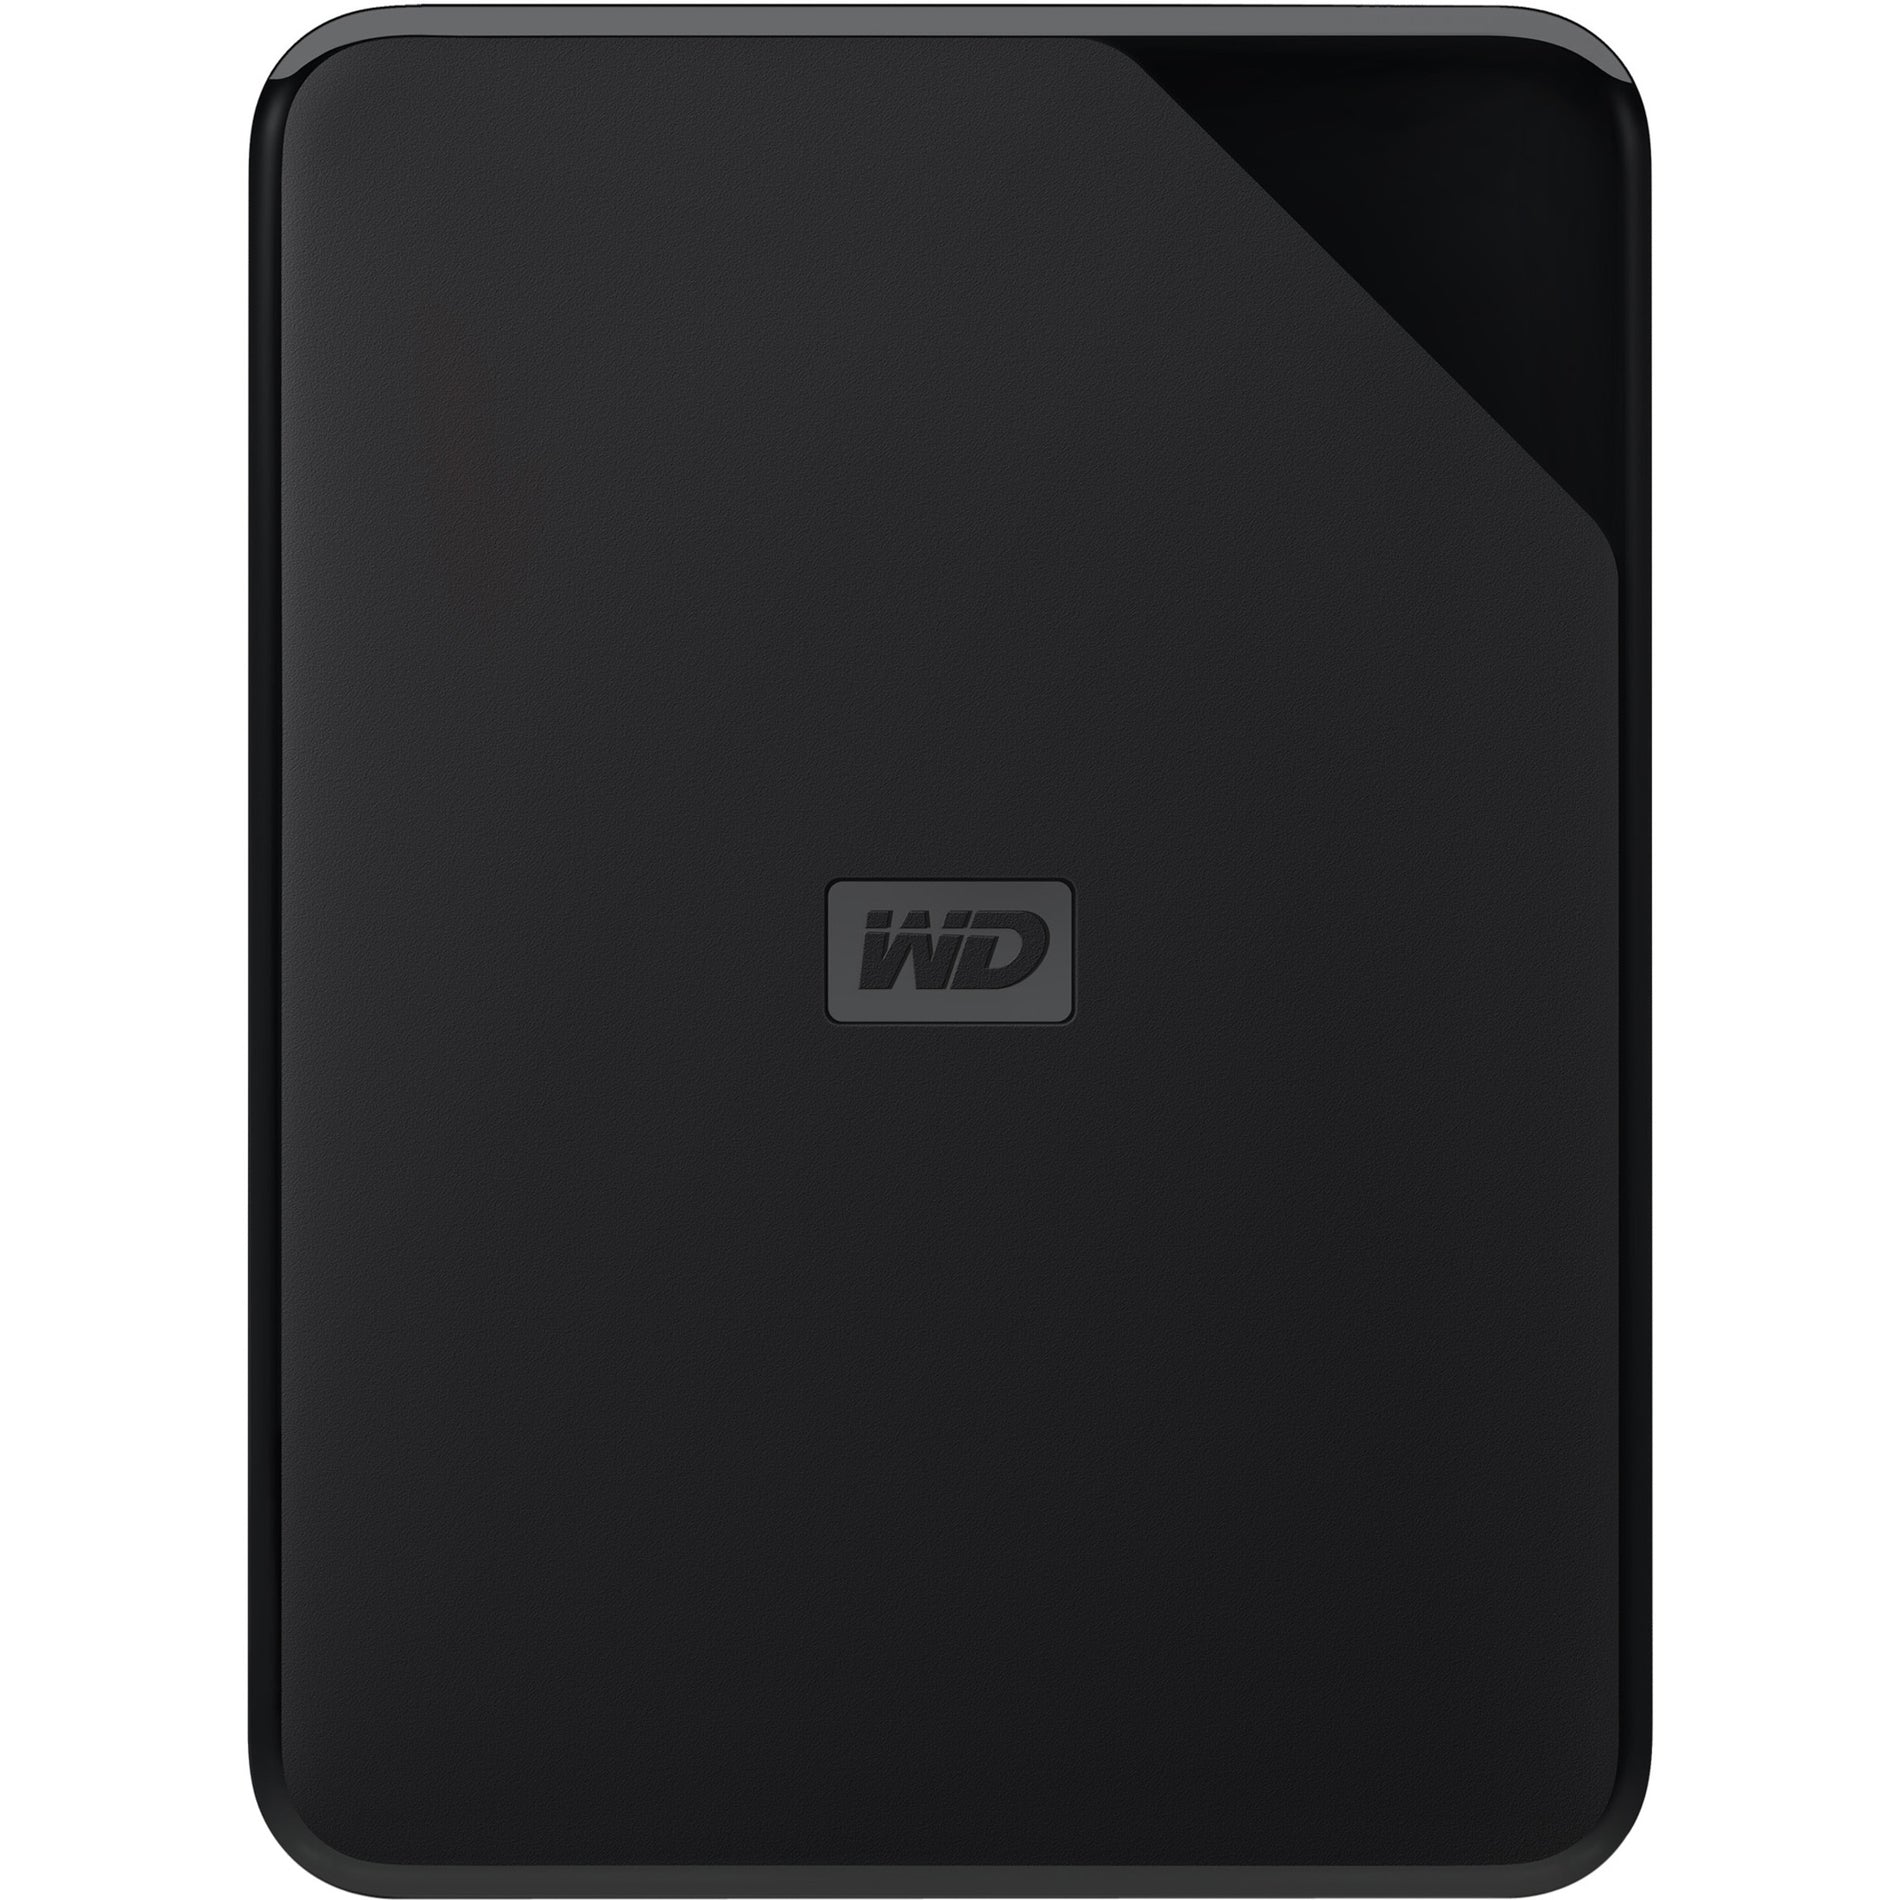 WD WDBEPK0020BBK-WESN Elements SE Portable Storage, 2 TB External Hard Drive, USB 3.0, Black